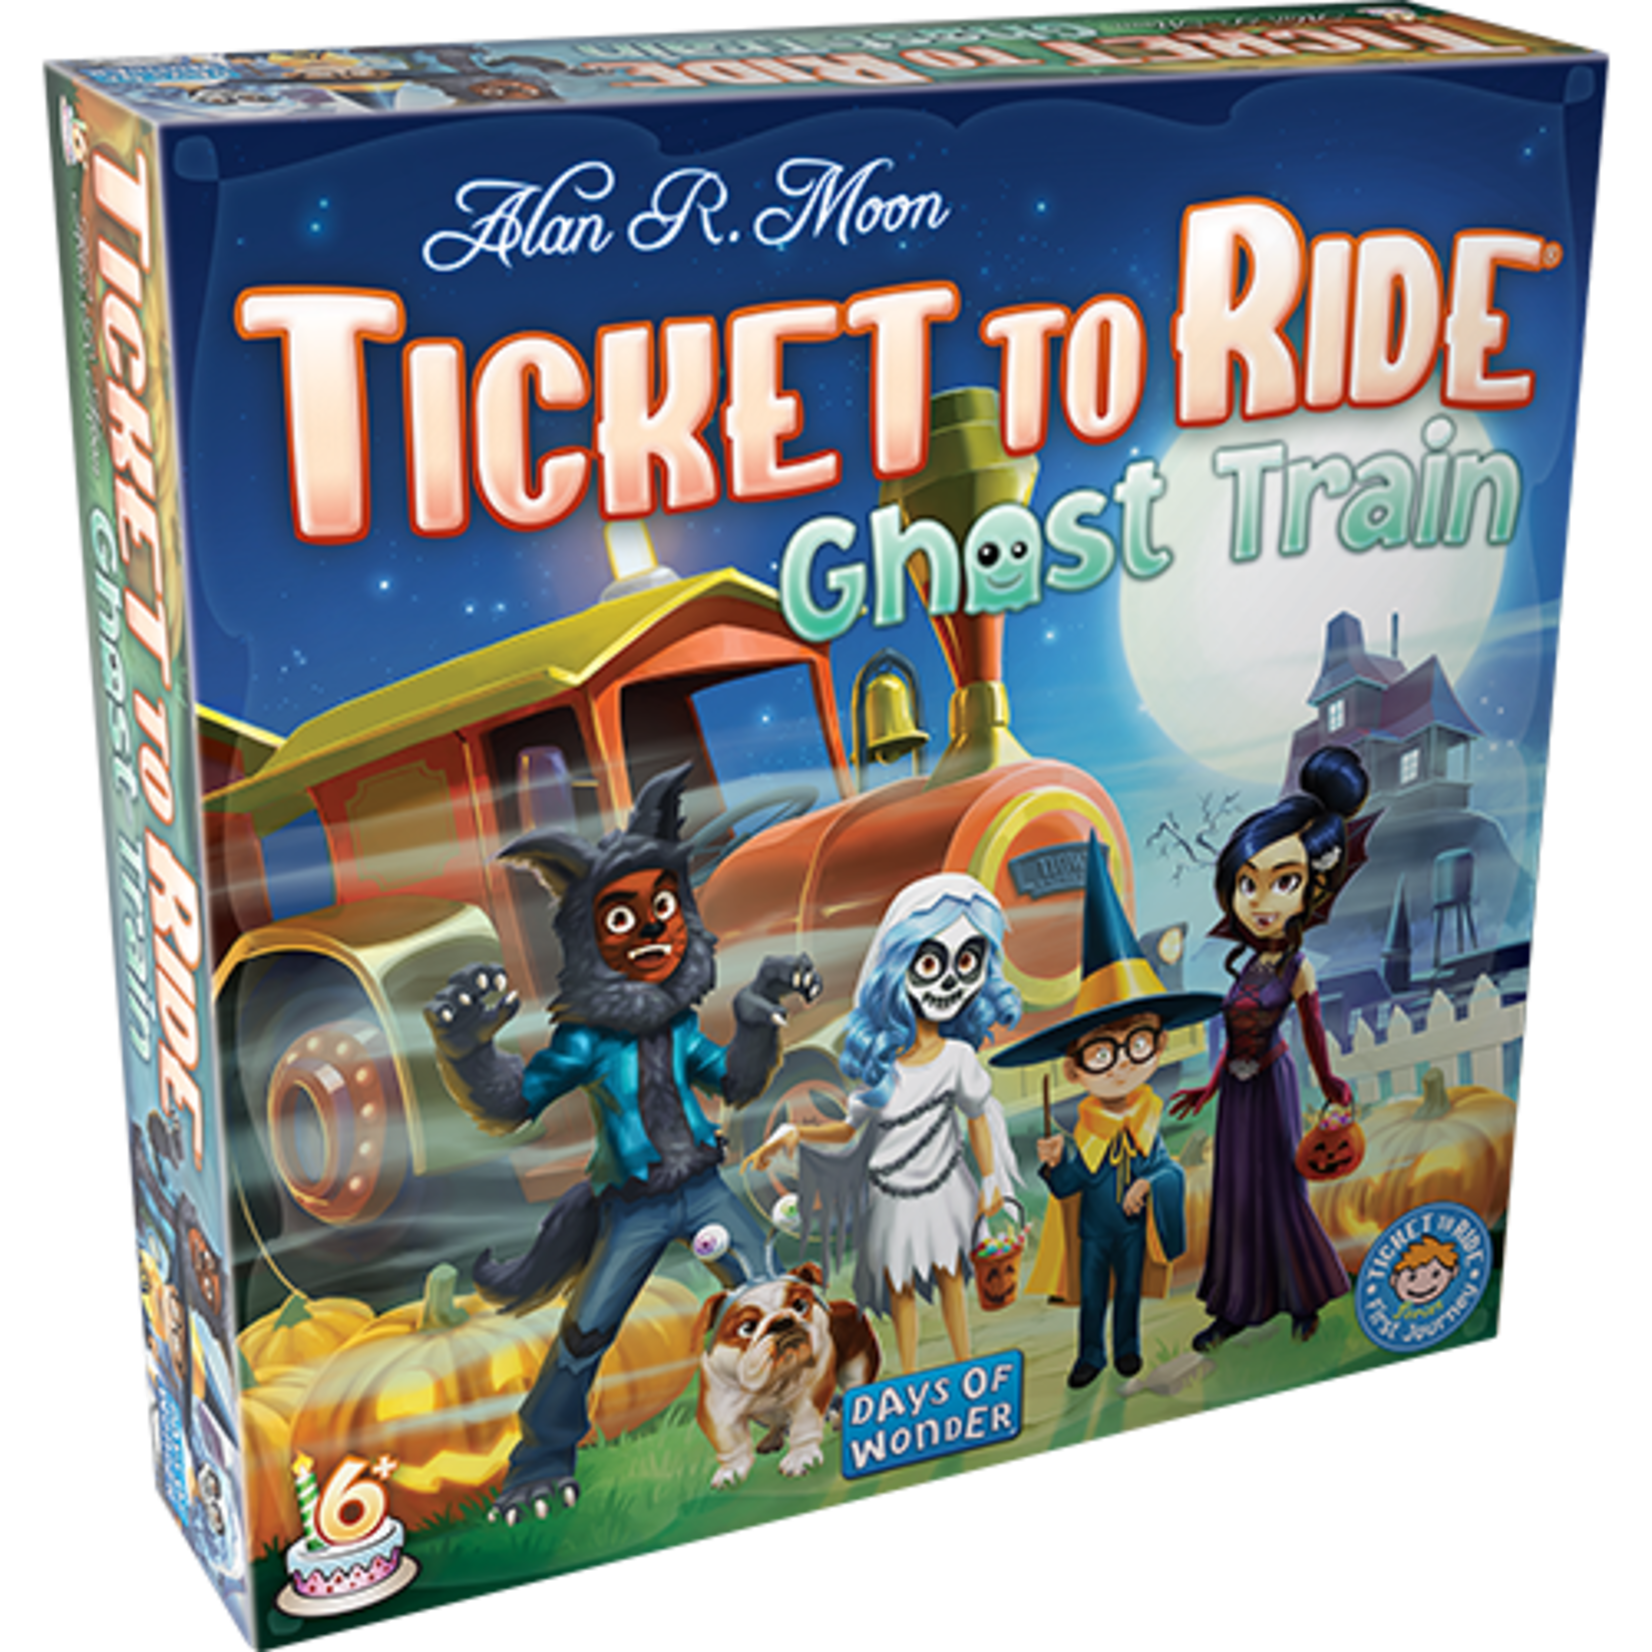 Days of Wonder Ticket to Ride Ghost Train